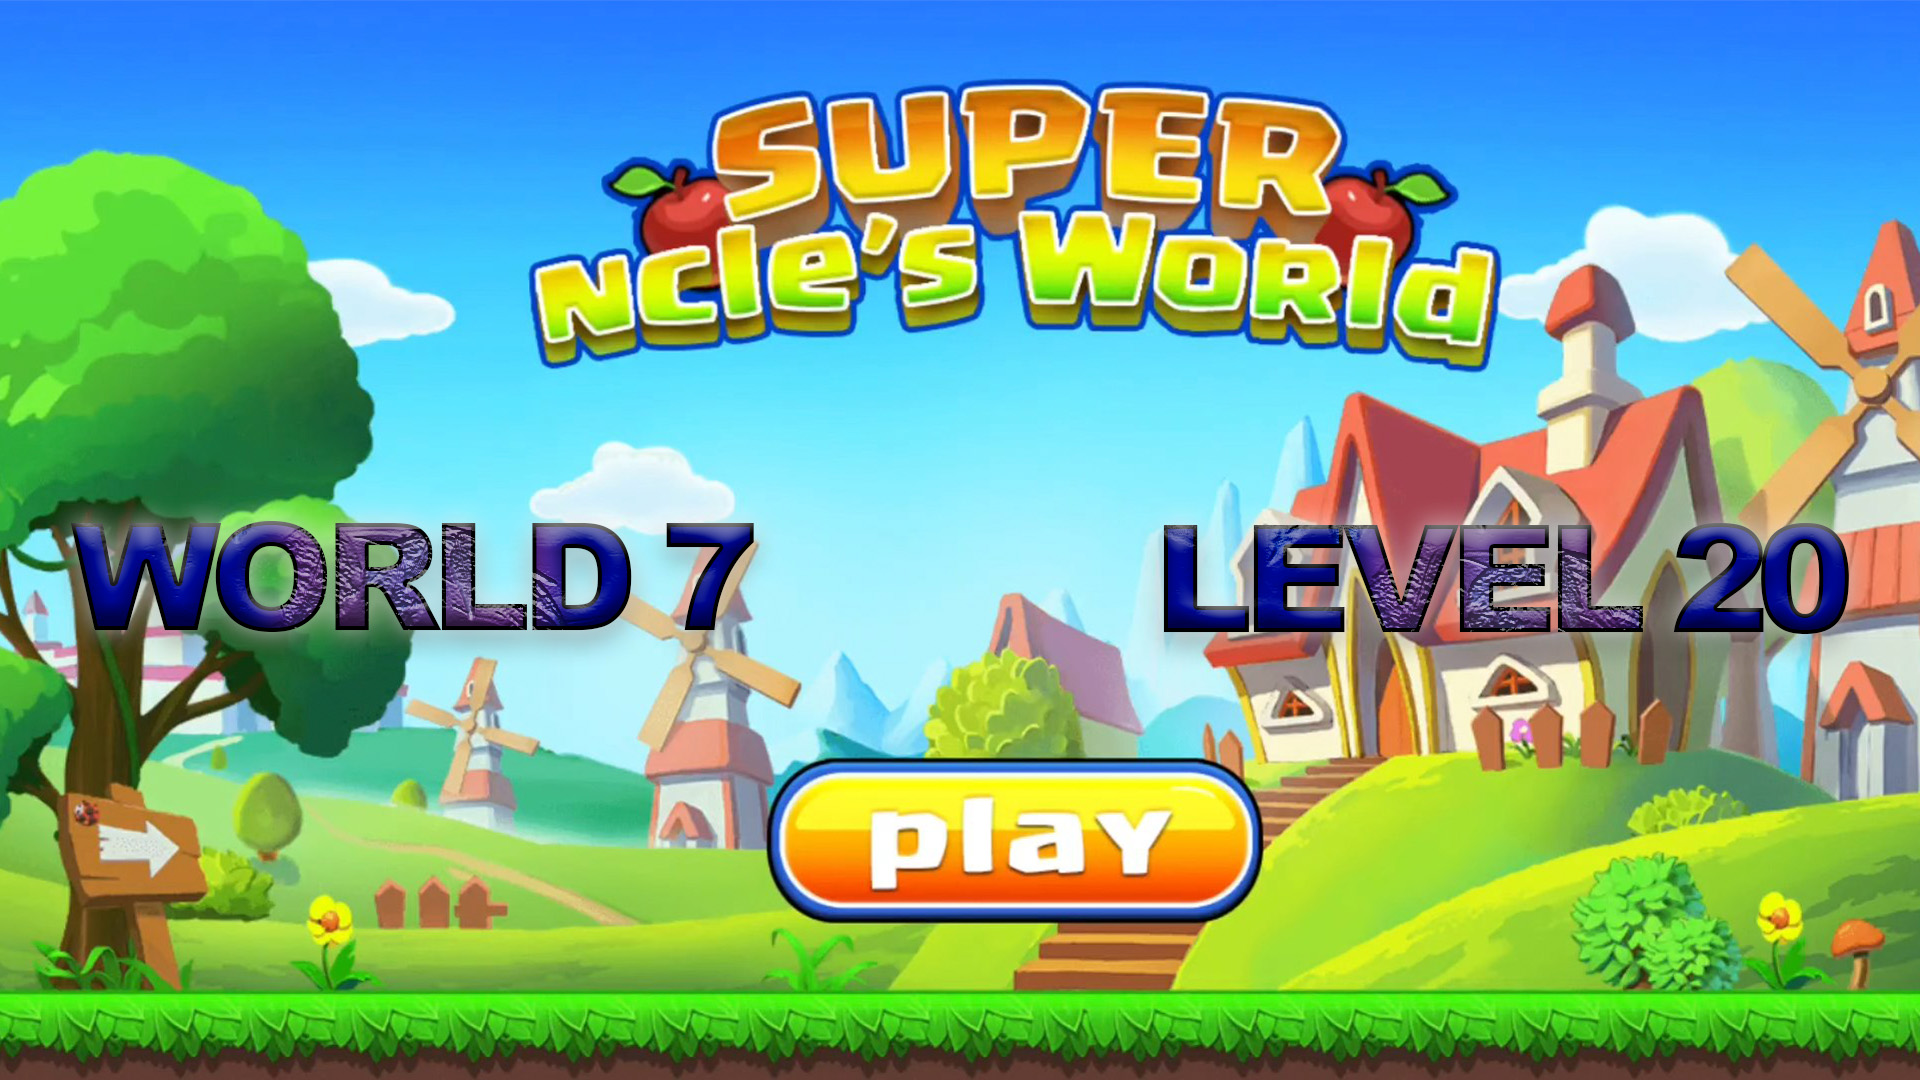 Super ncle's  World 7. Level 20.